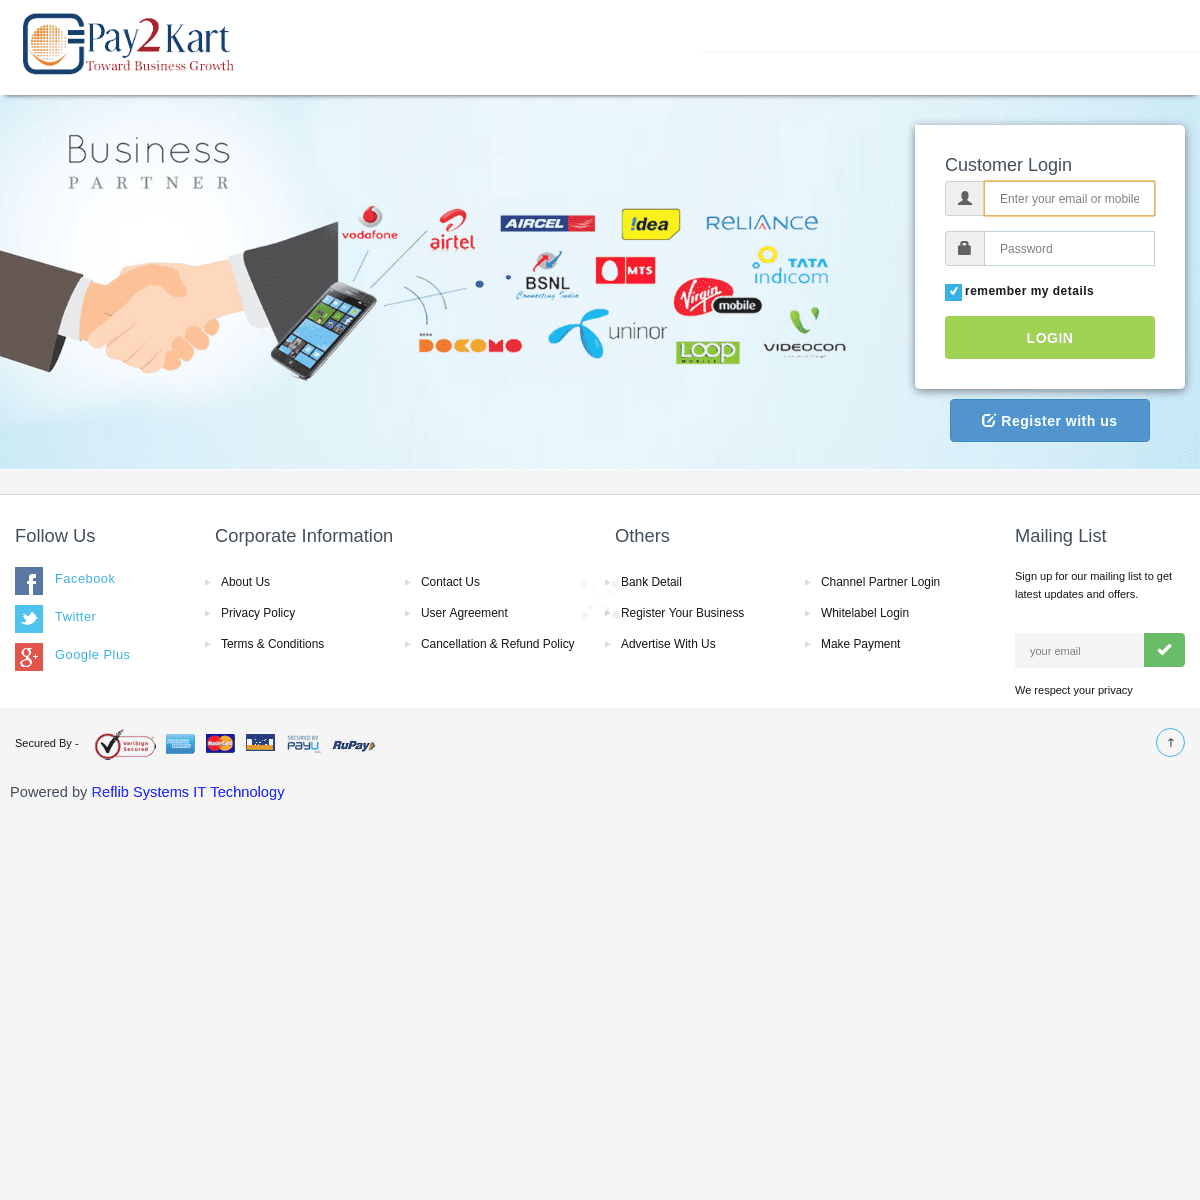 A complete backup of pay2kart.com